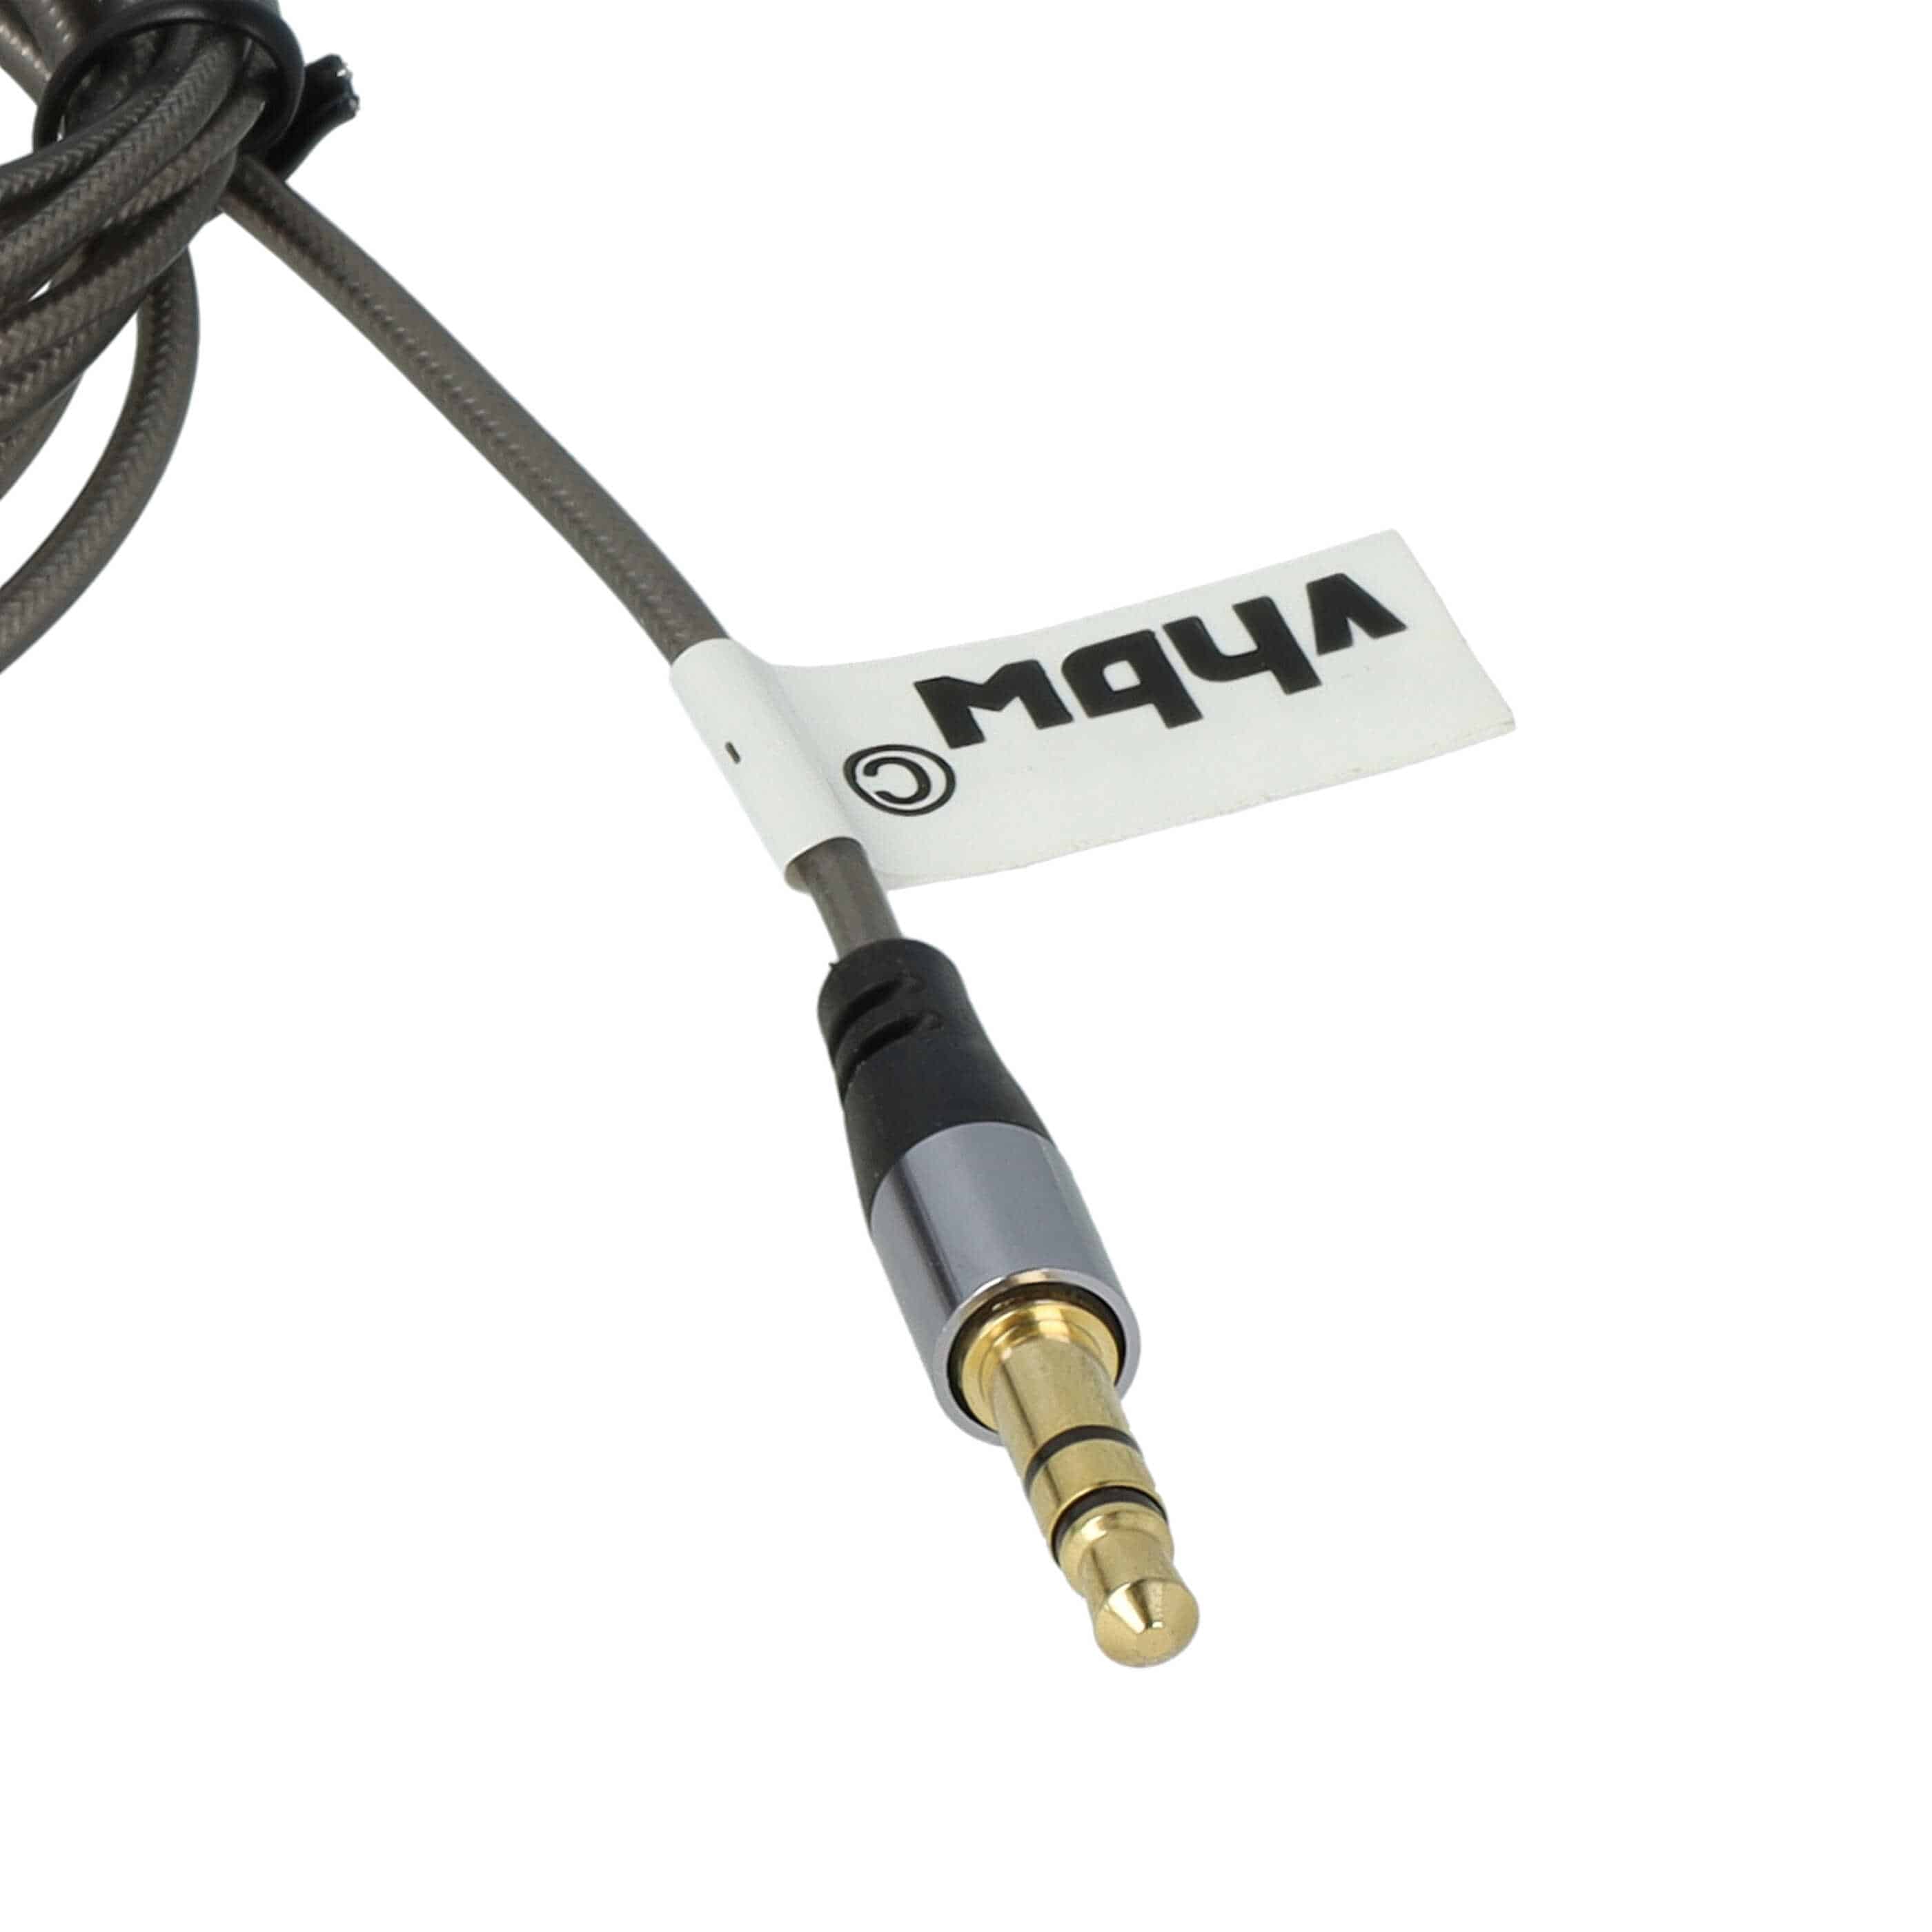 Kopfhörer Kabel passend für Shure u.a., 120 cm, grau